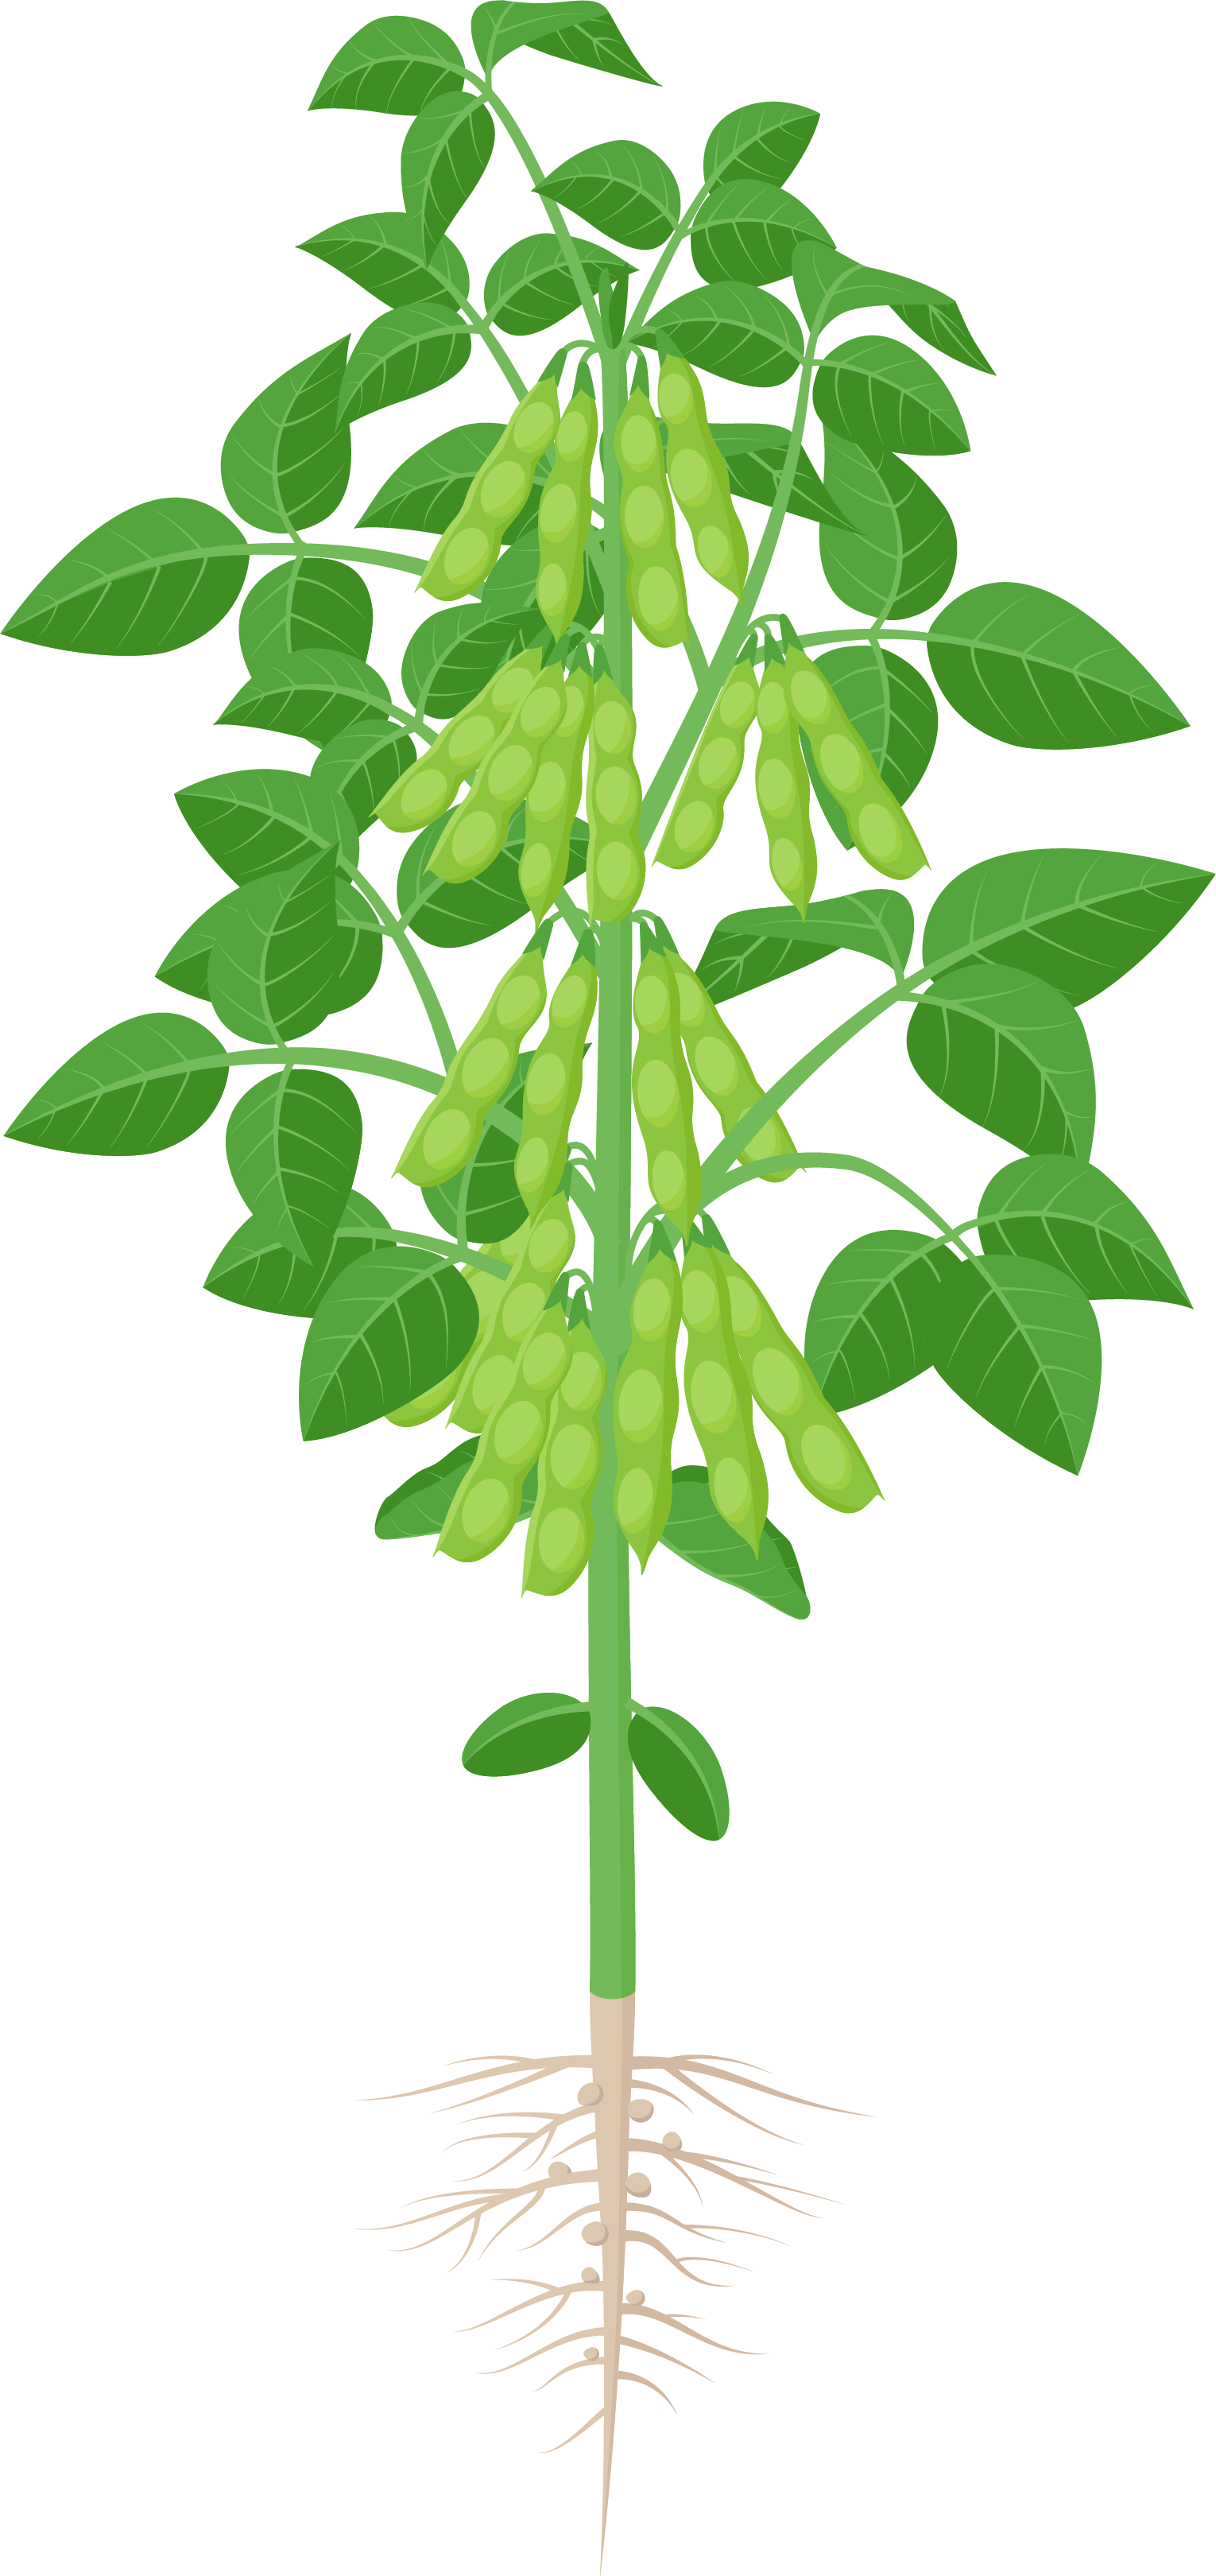 Soybean plant illustration detailing how activator adjuvants work